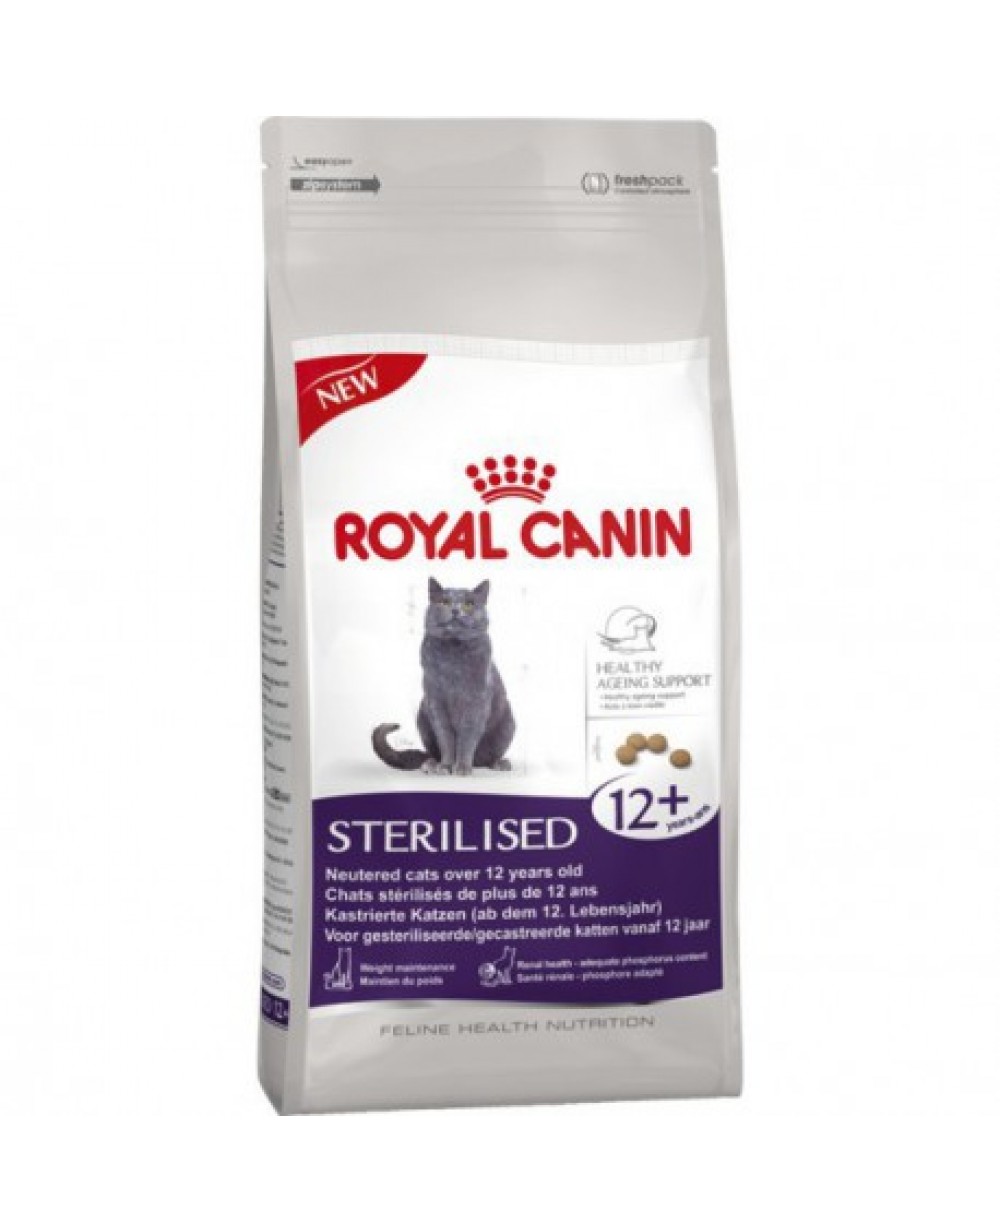 Royal canin для кошек sterilised. Роял Канин 12+ для стерилизованных кошек. Корм Роял Канин для кошек 12+. Роял конрн 12 + для стерил. Сухой корм для кошек Роял Канин Стерилайзд.